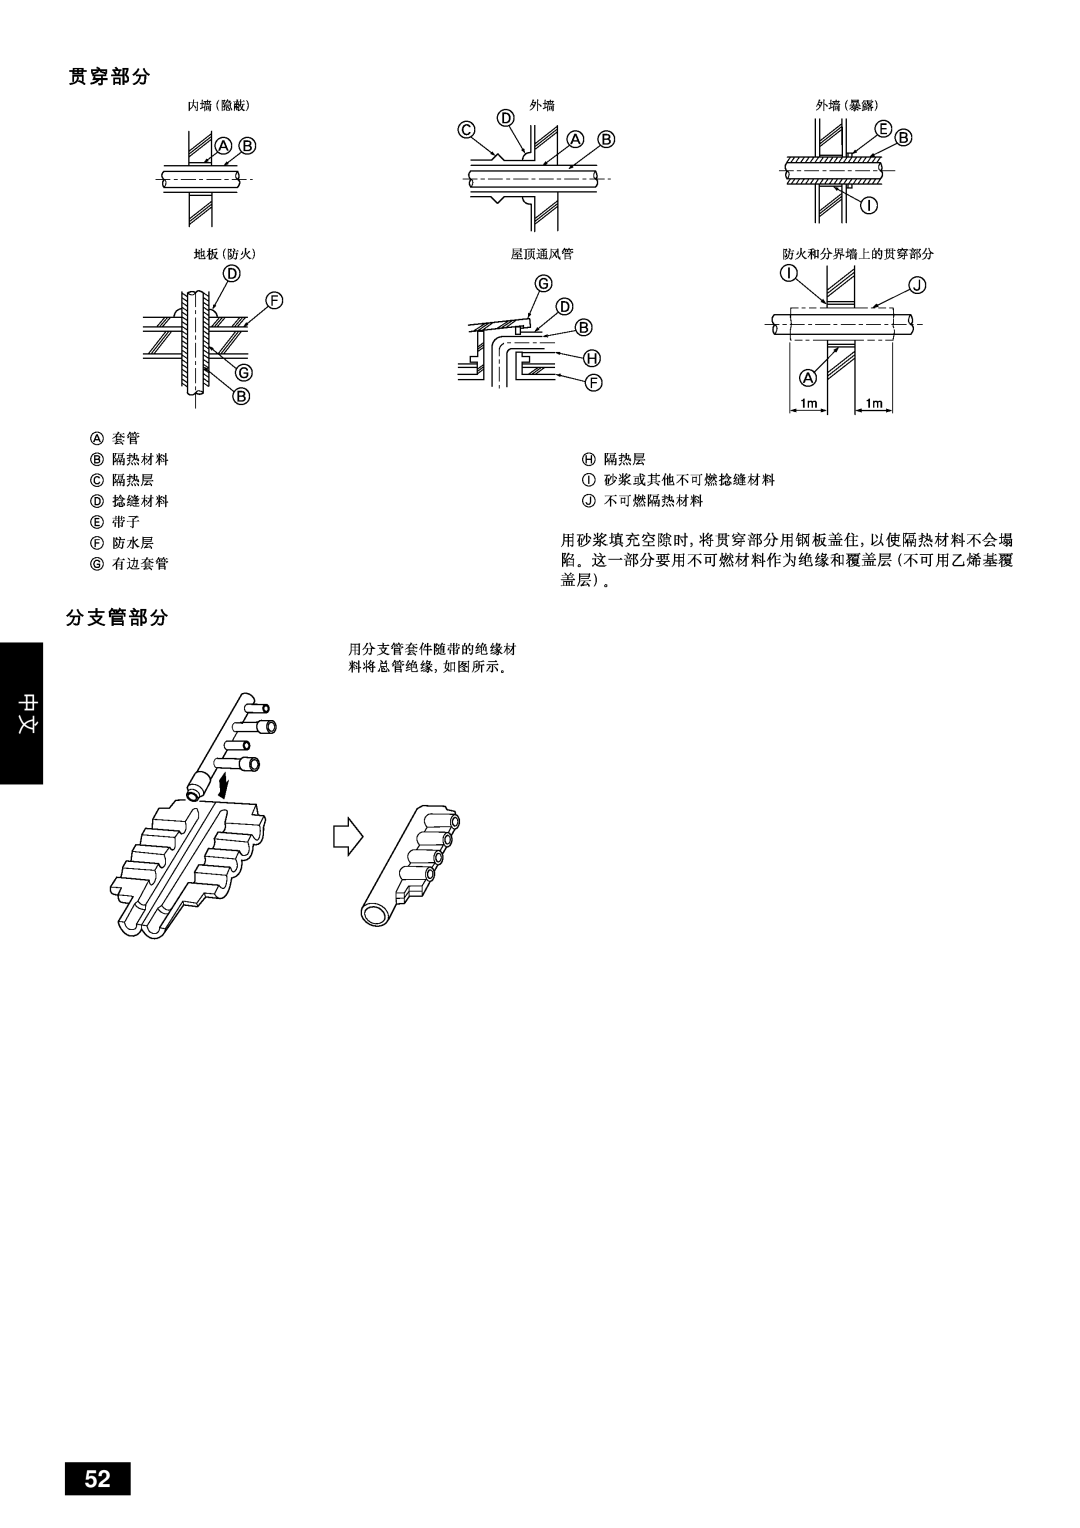 Mitsubishi Electronics PUHY-YMC installation manual D F G B, #$%& *+& 012345678 .#$%&*+,-./0 1$%#234, A B C D E F G, H I J 